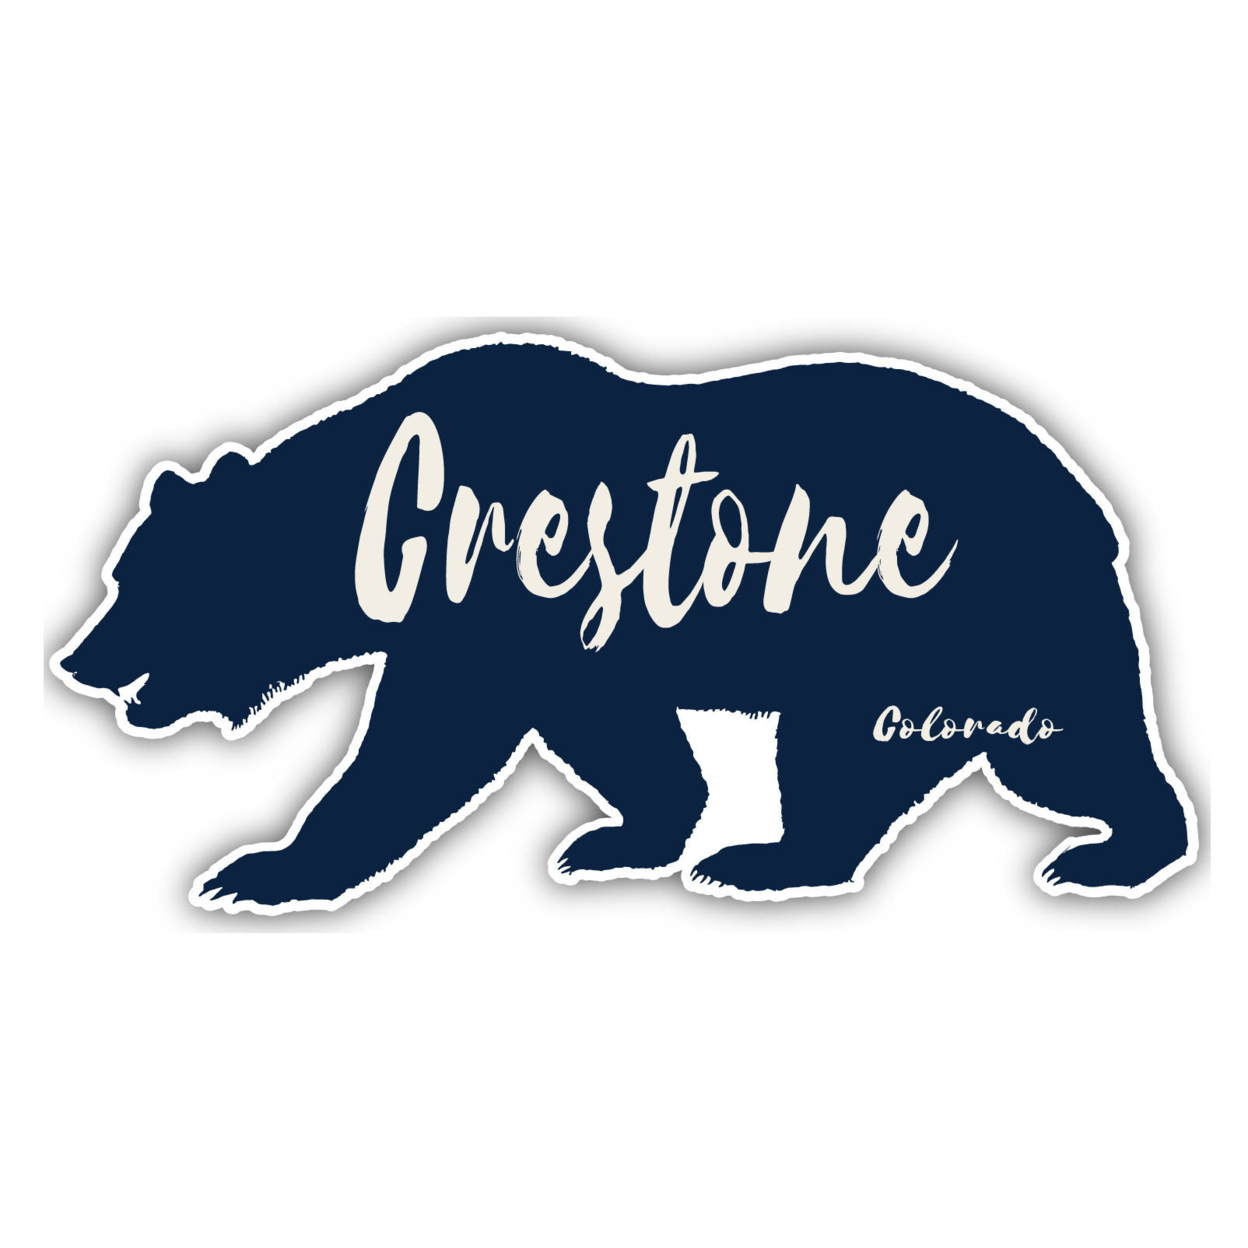 Crestone Colorado Souvenir Decorative Stickers (Choose Theme And Size) - Single Unit, 10-Inch, Bear